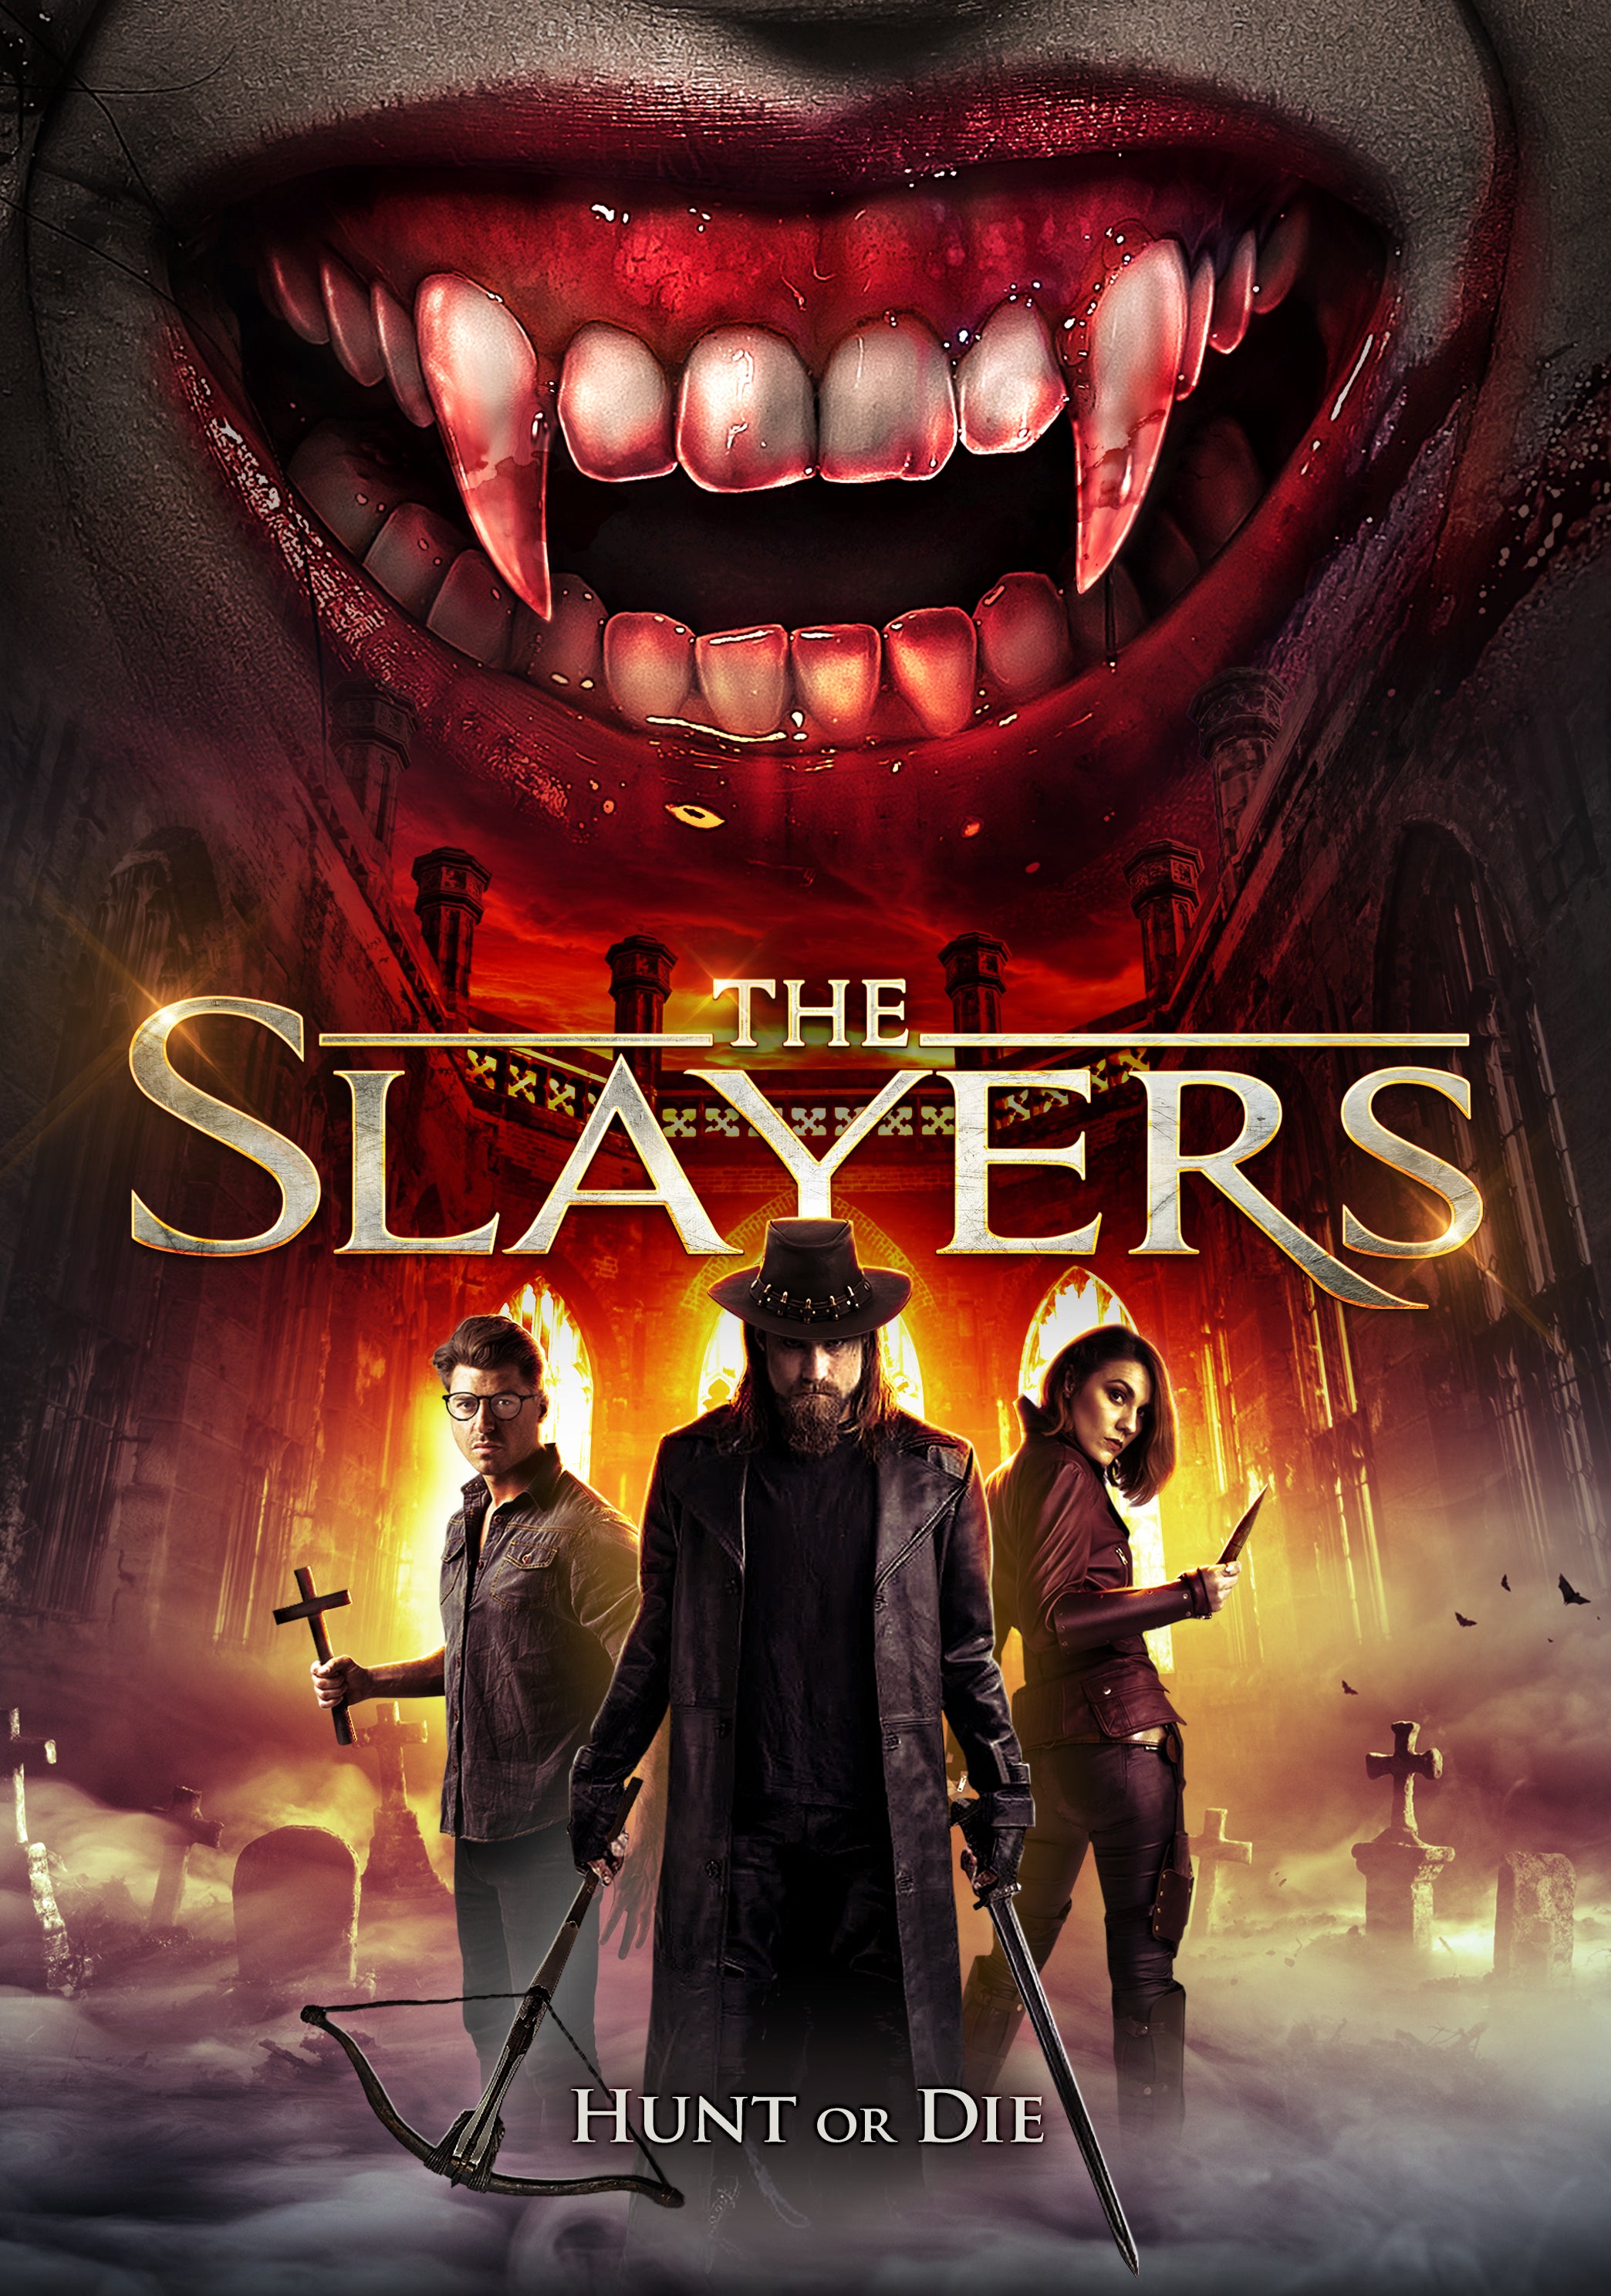 THE SLAYERS DVD